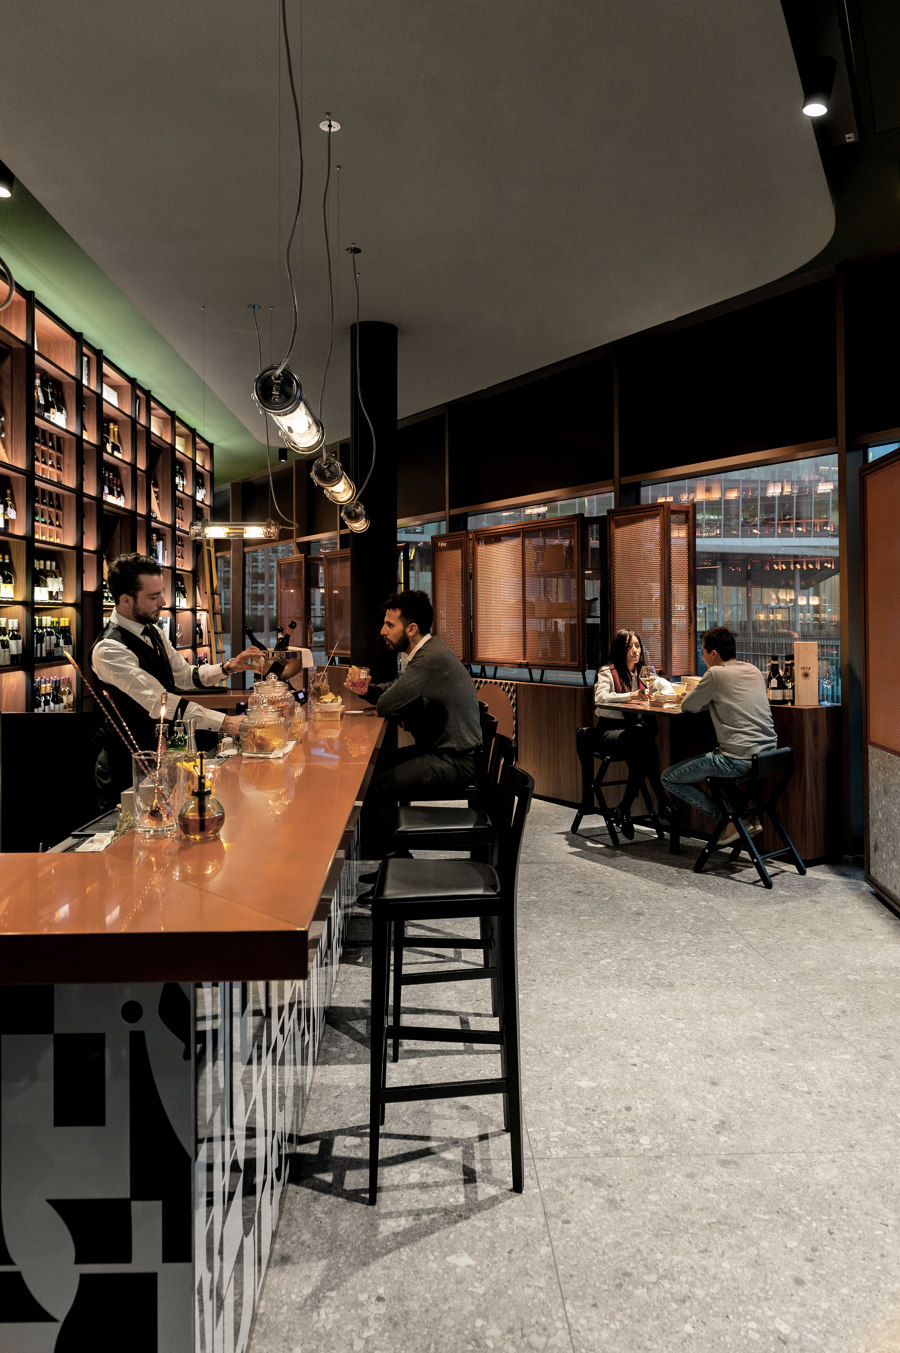 Peck CityLife von Vudafieri-Saverino Partners | Café-Interieurs